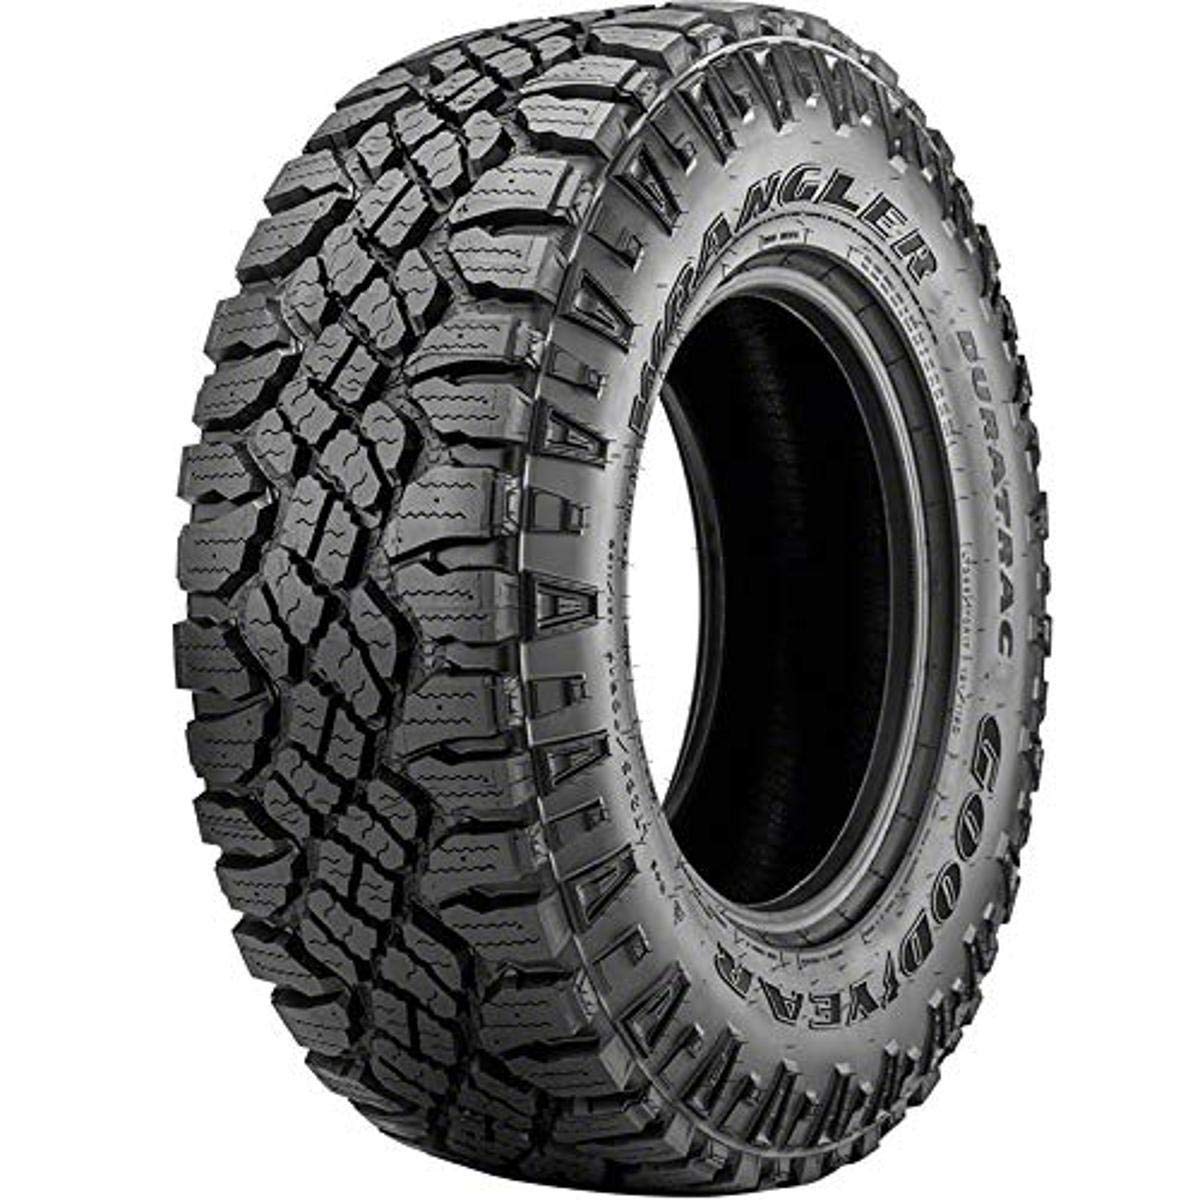 Goodyear Wrangler DuraTrac All-Season Radial Tire - 265/70R16 112S- Buy  Online in El Salvador at Desertcart - 13924294.